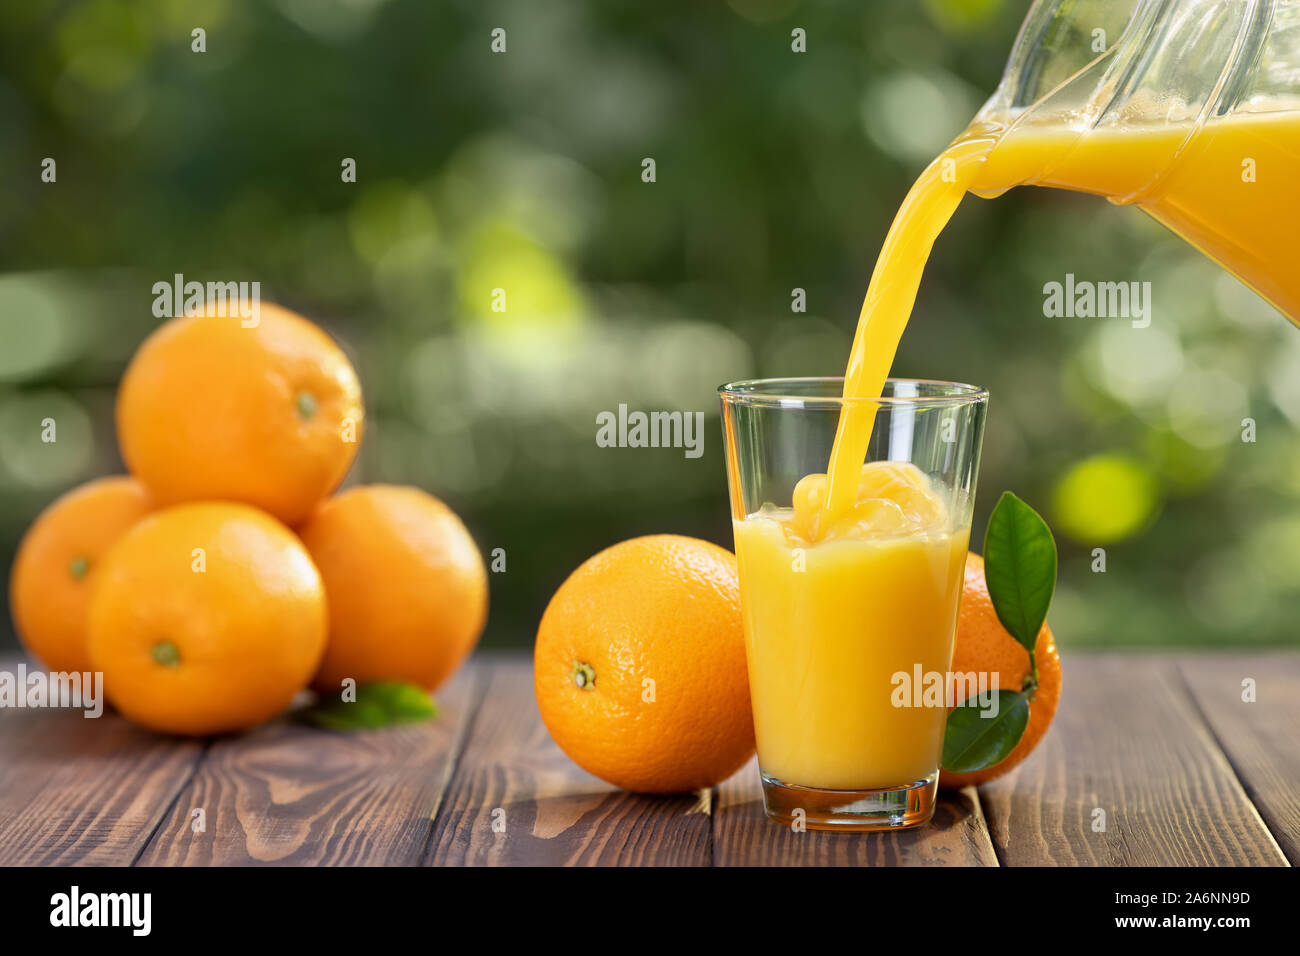 Premium Photo  A glass pitcher of orange juice next to an orange.